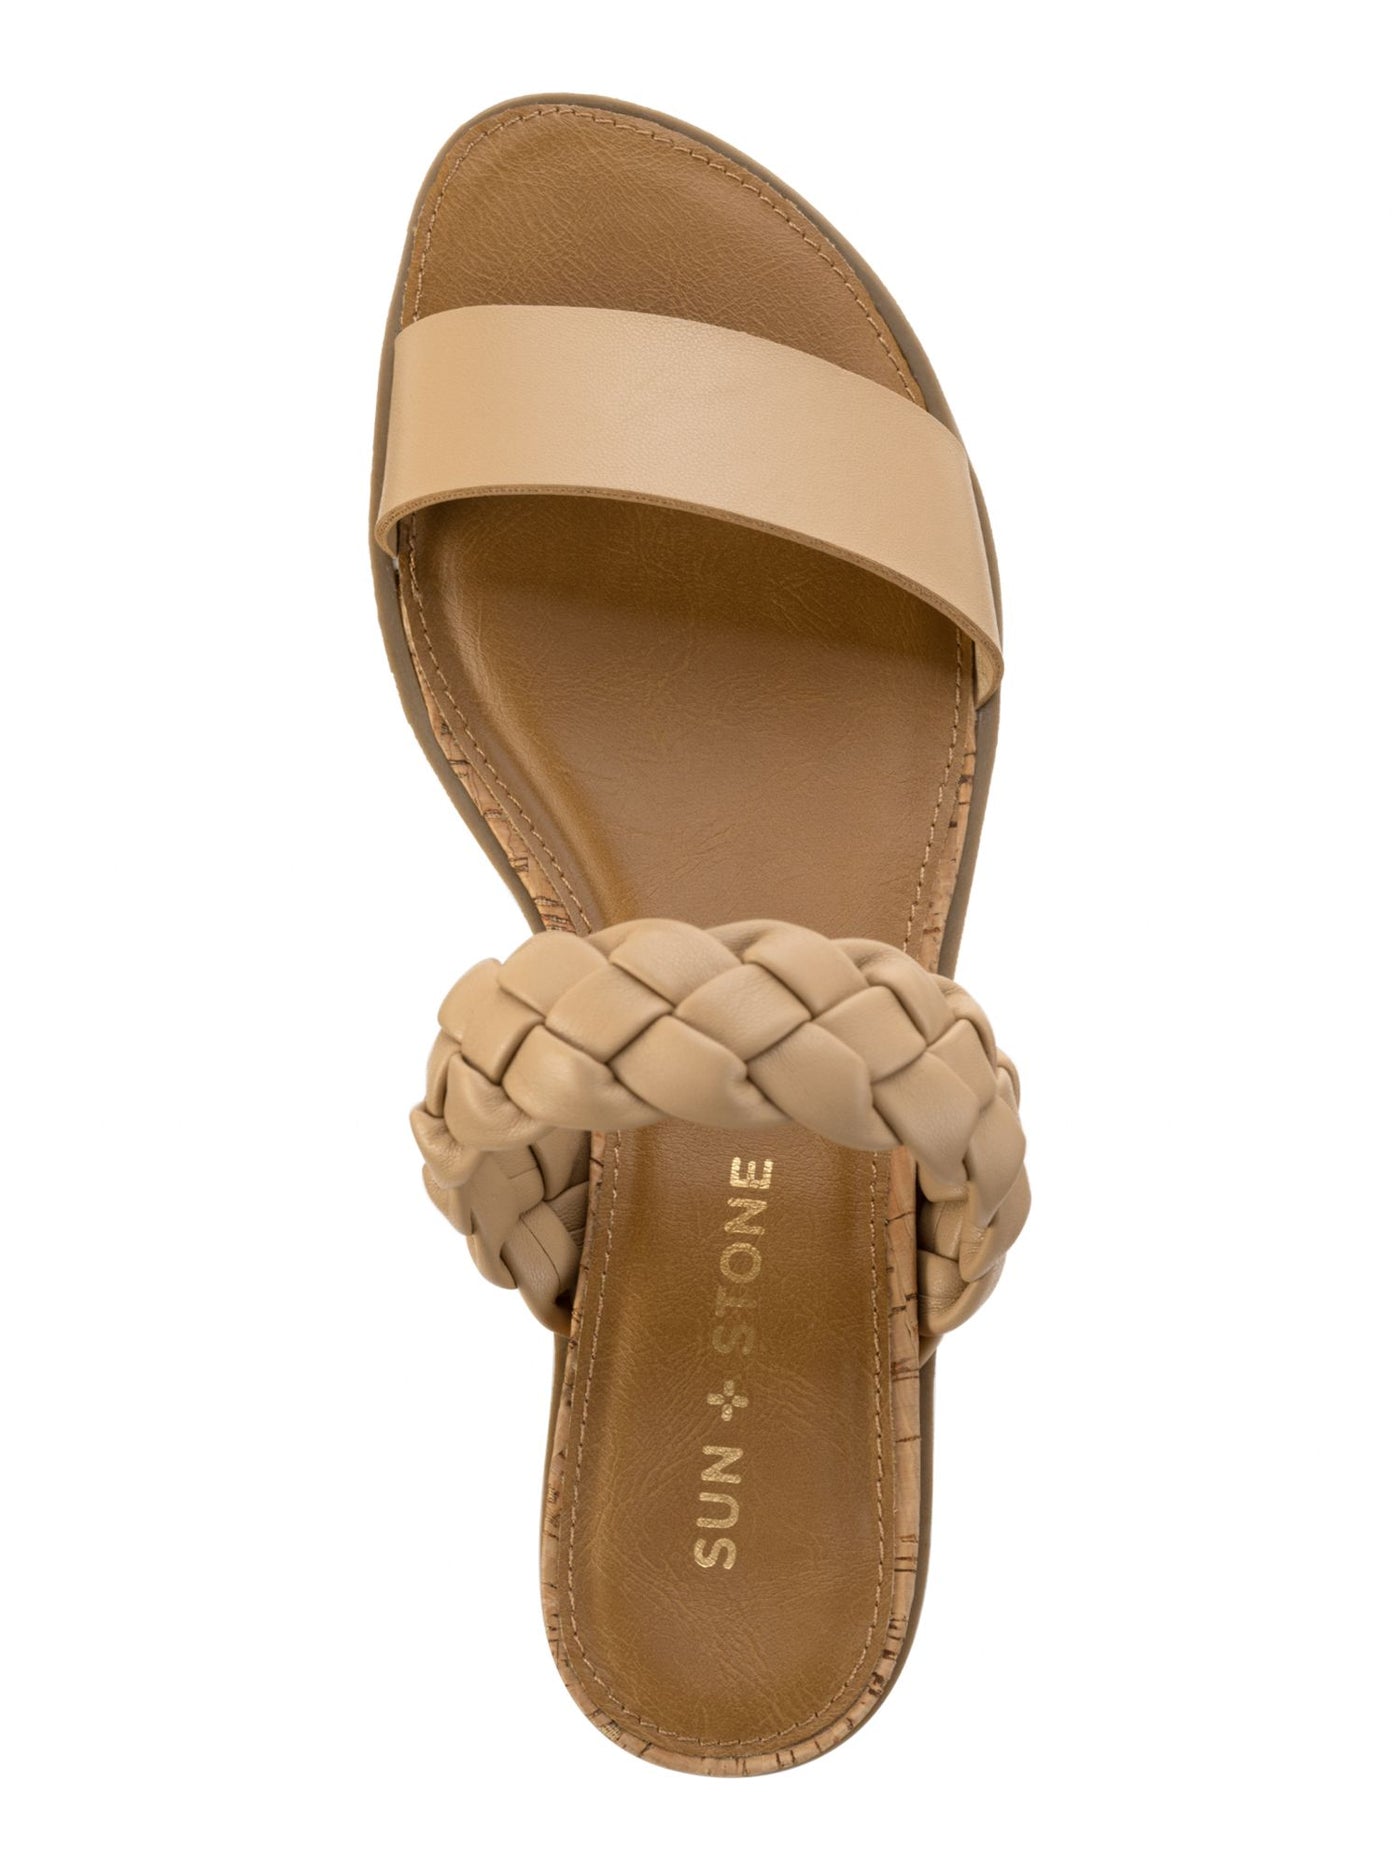 SUN STONE Womens Beige Mixed Media Braided Cushioned Slip Resistant Easten Round Toe Wedge Slip On Slide Sandals Shoes 11 M